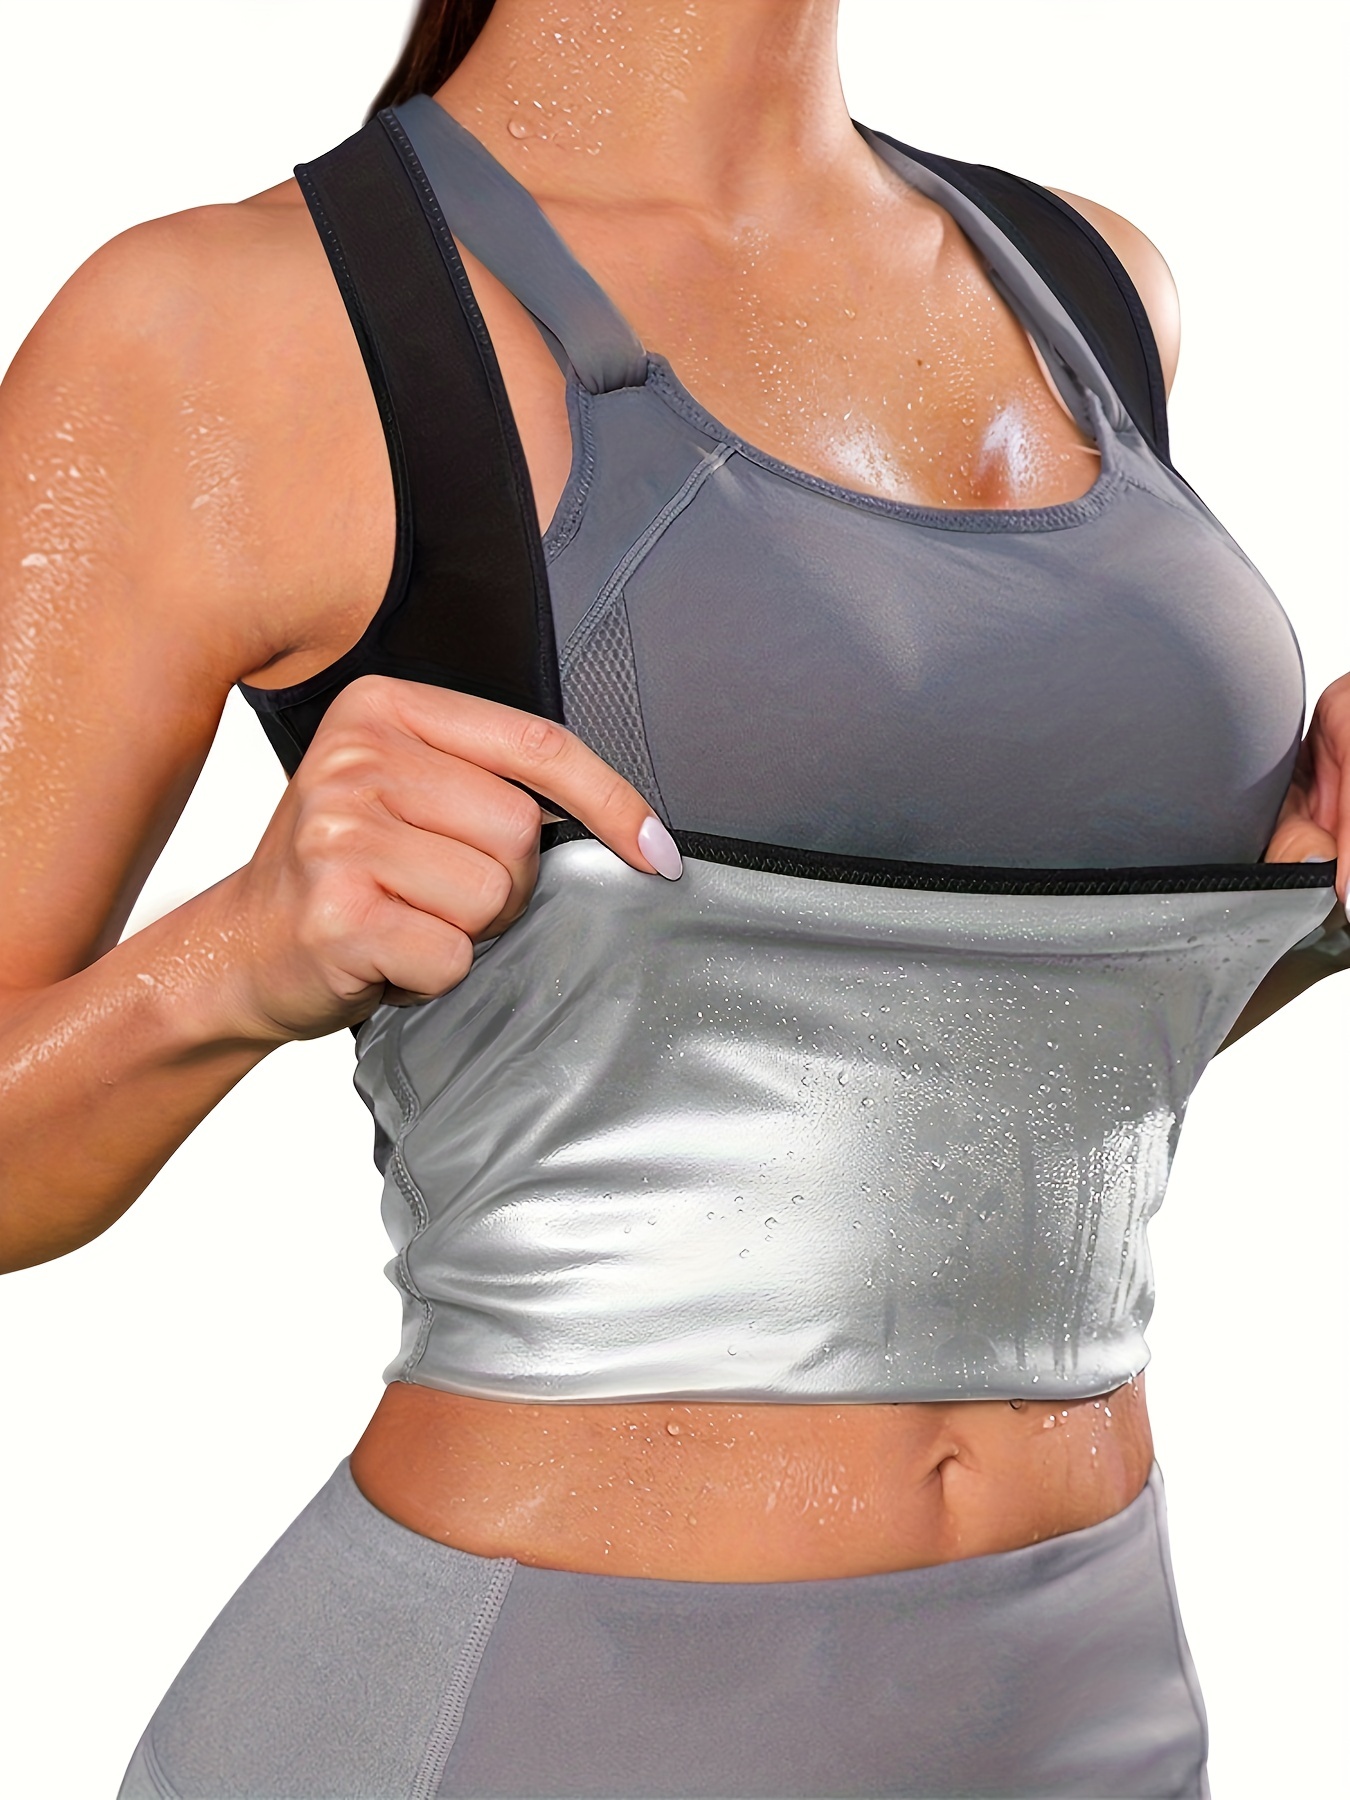  NonEcho Women Sauna Body Shaper Sweat Suit Sleeve Spa Cami Hot  Neoprene Slimming Workout Vest Waist Trainer Top : Sports & Outdoors